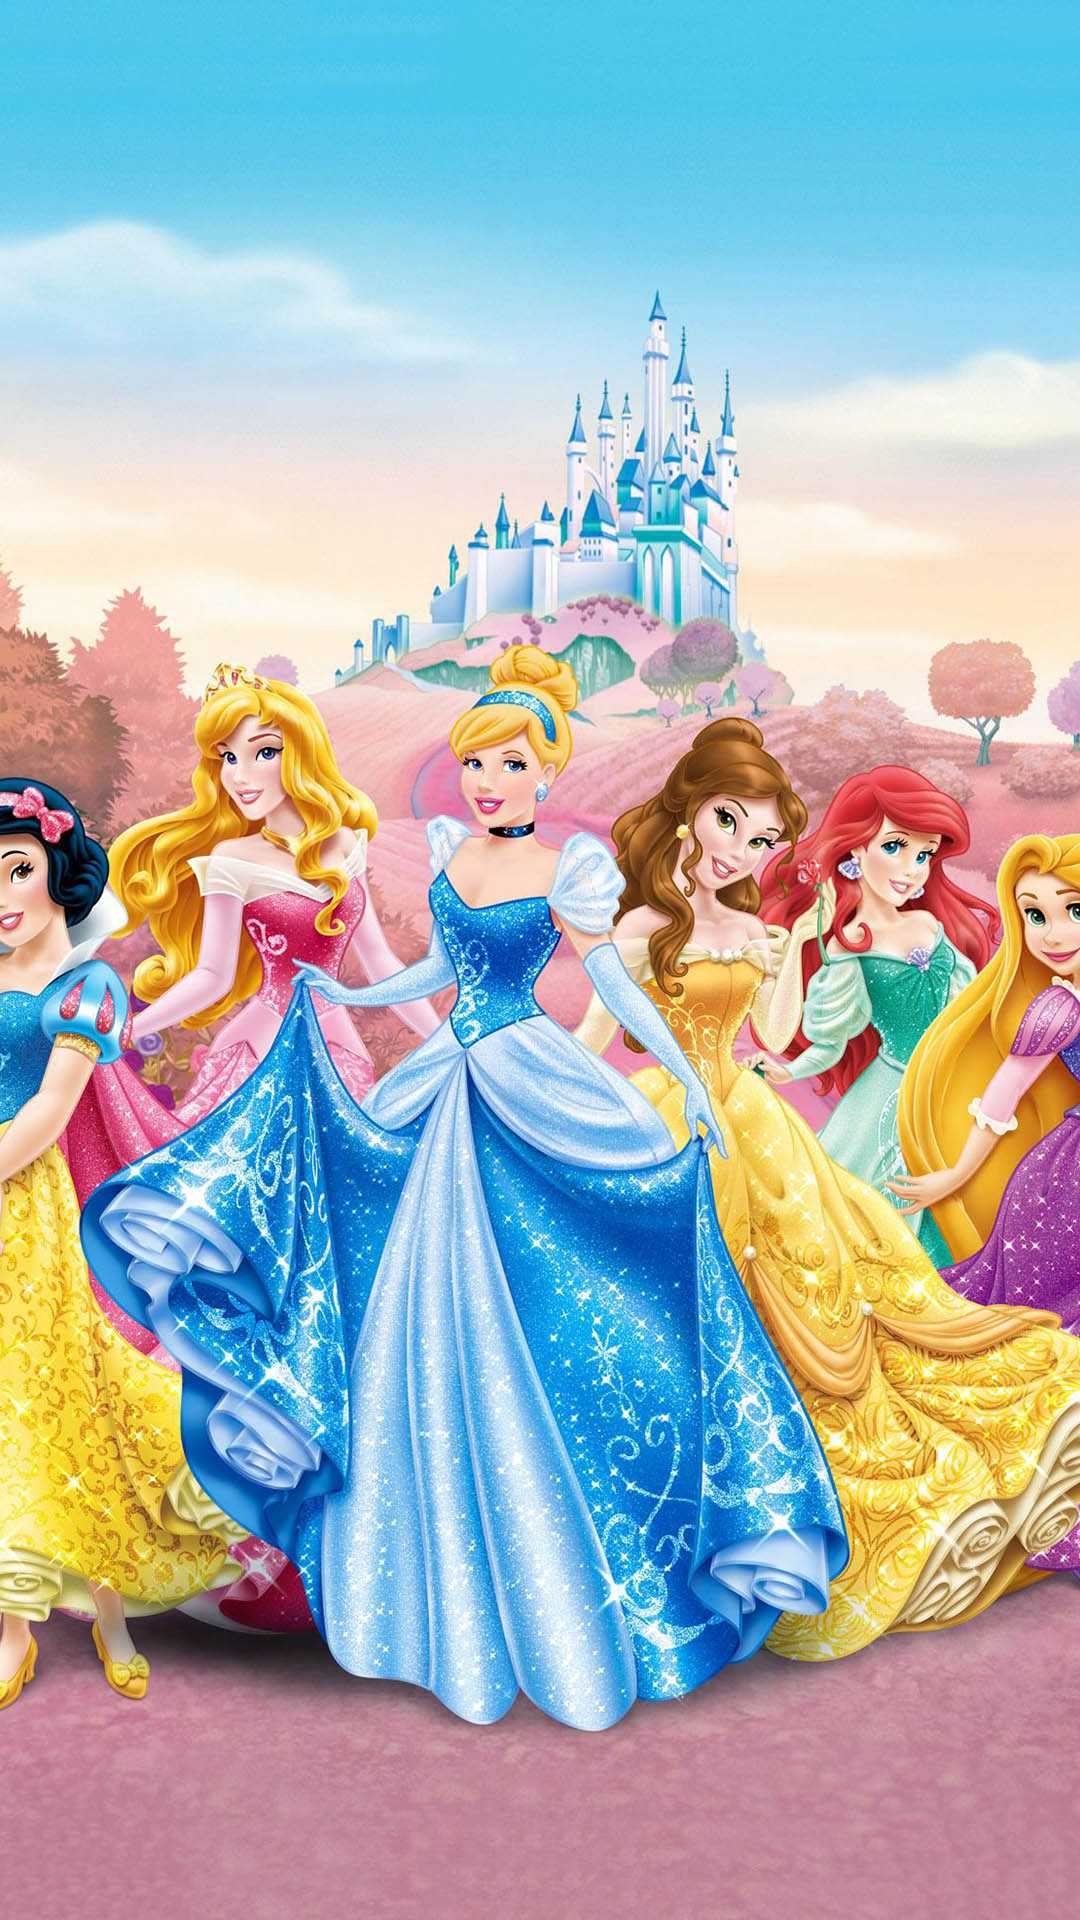 Belle - Disney Princess Wallpaper (35483623) - Fanpop